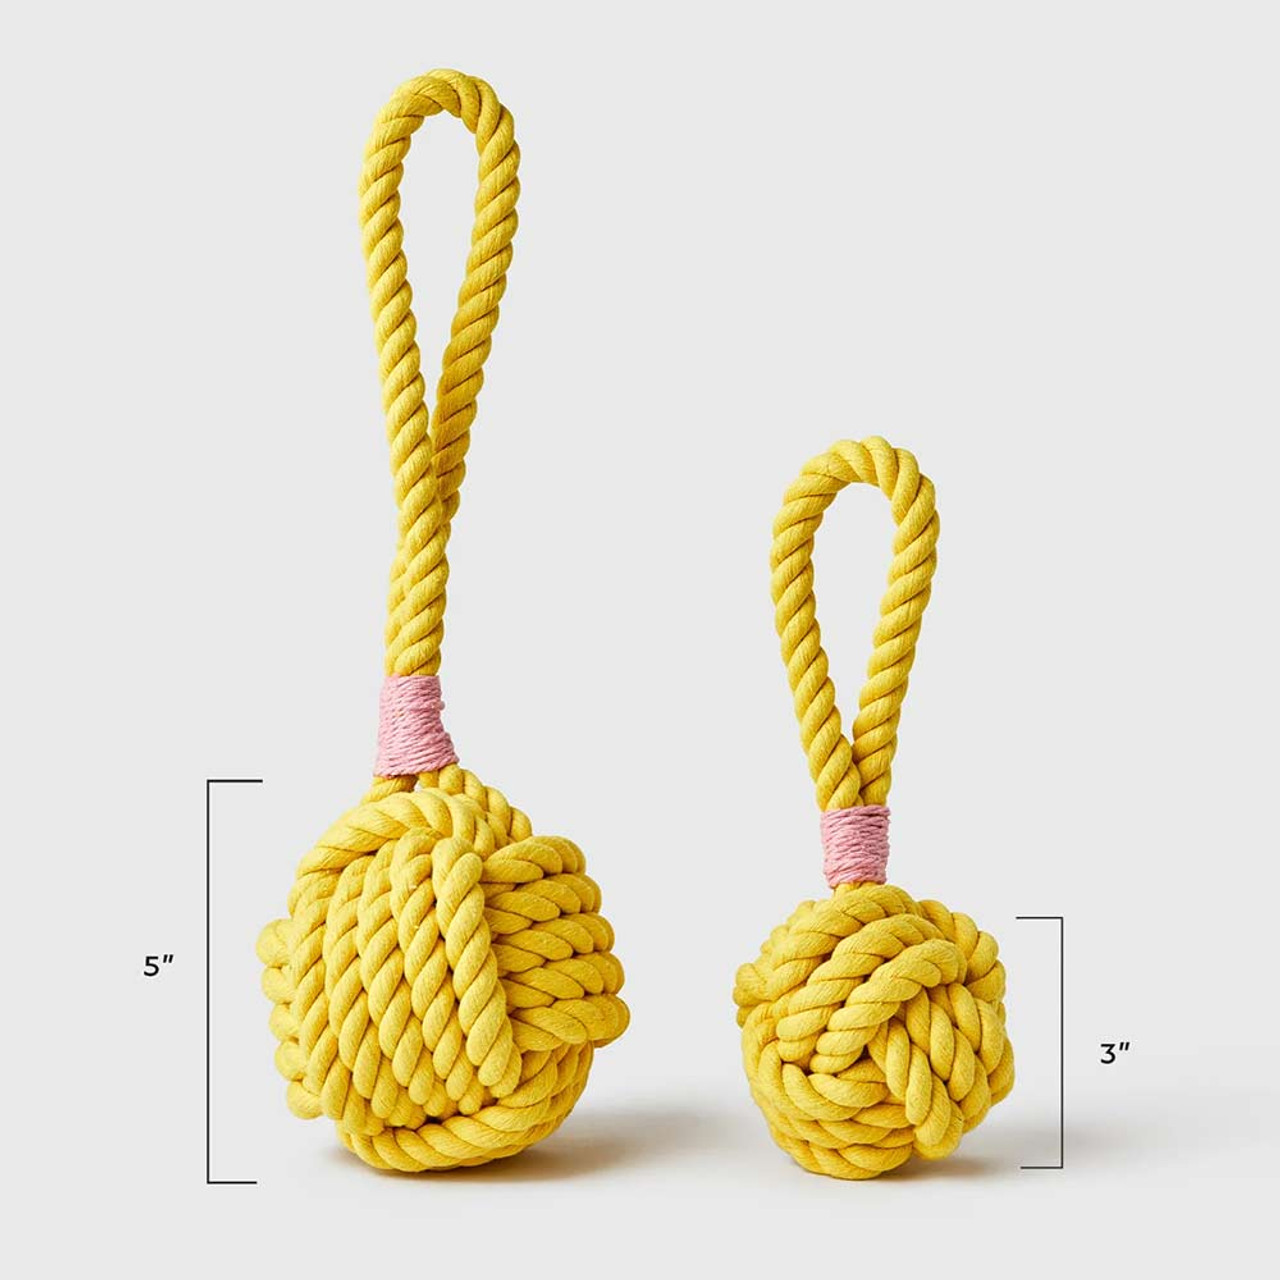 Hemp Dog Toy Double Knot Rope Toy